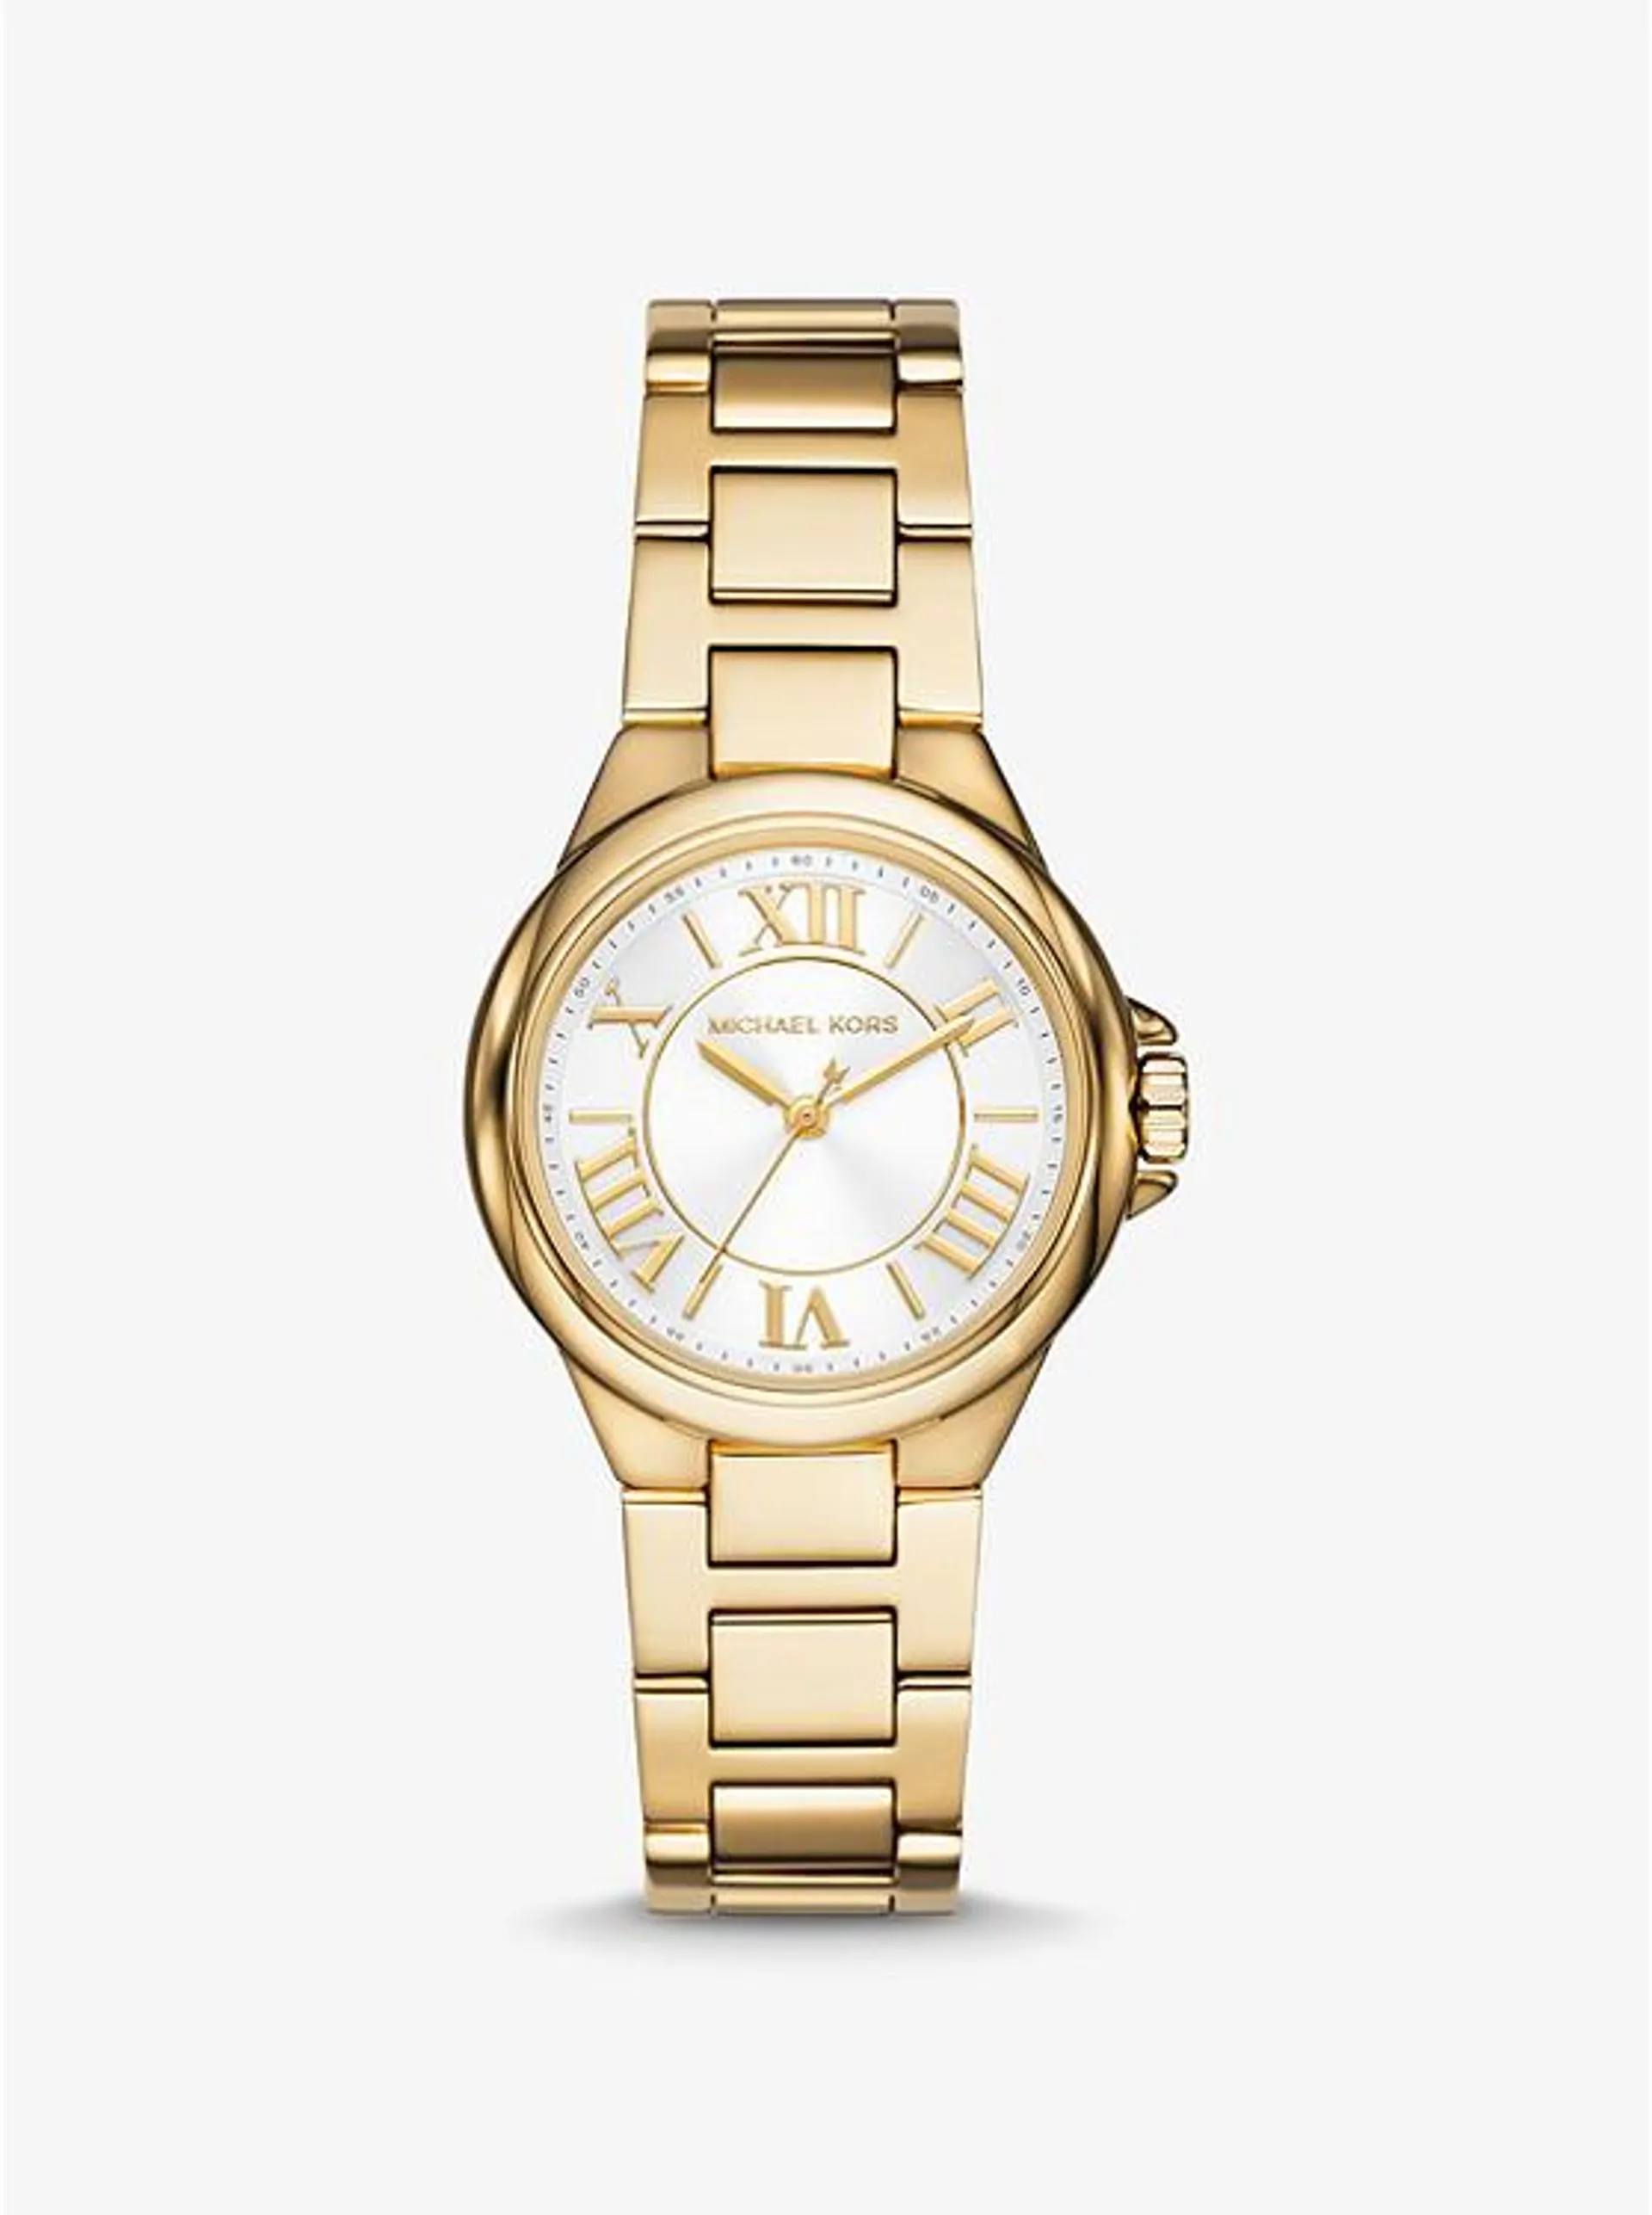 Mini Camille Gold-Tone Watch